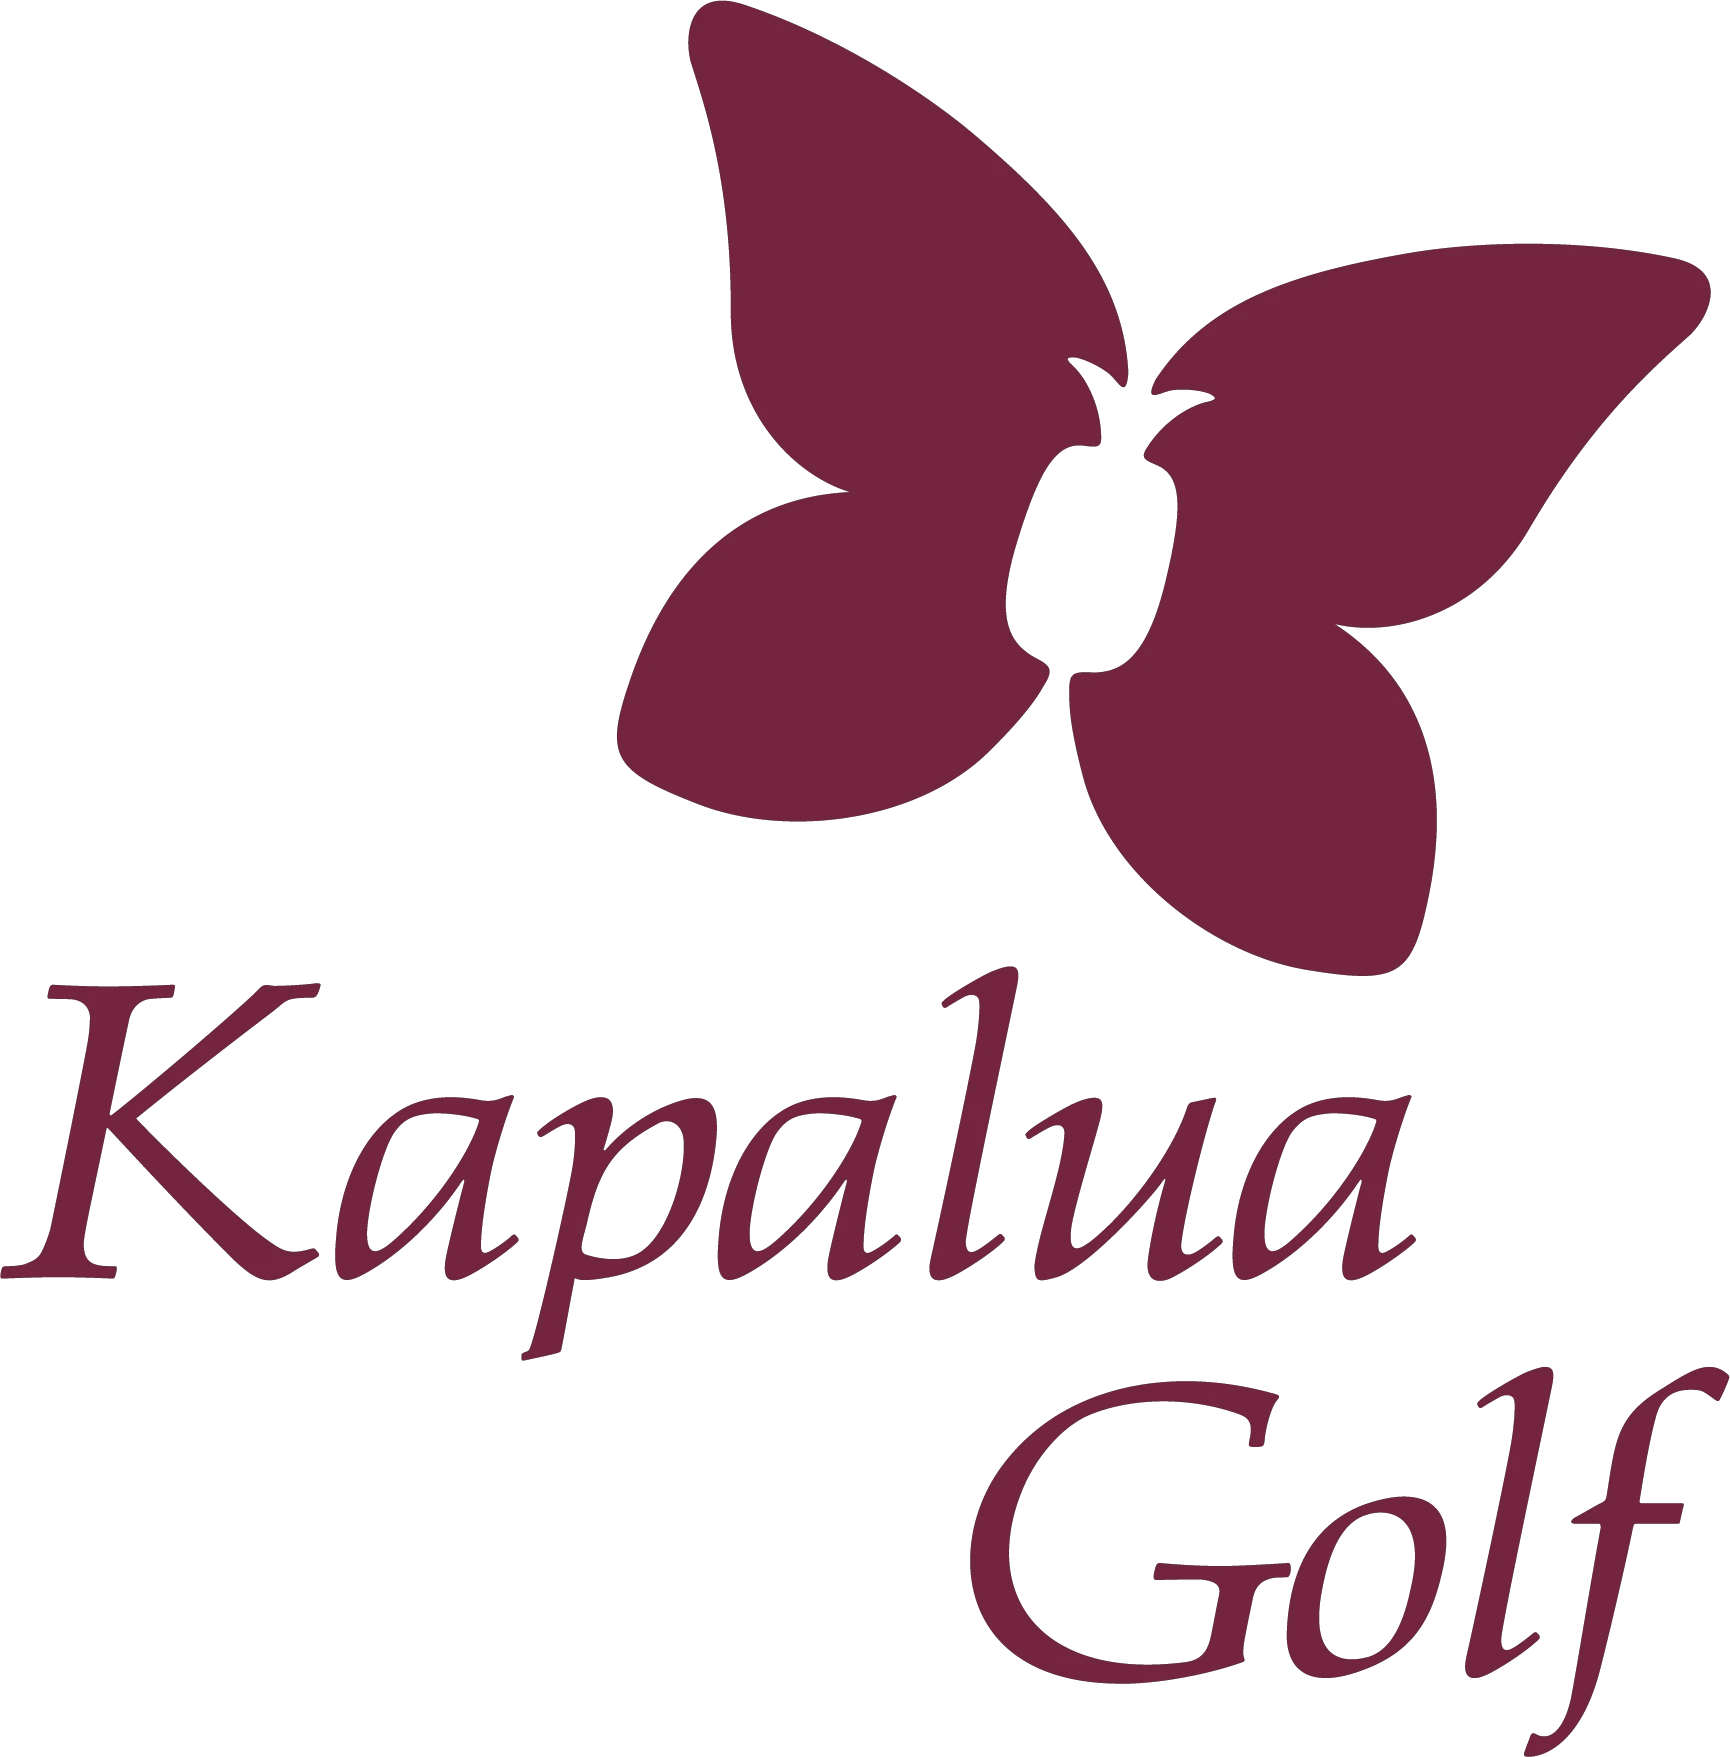 Kapalua Plantation Course